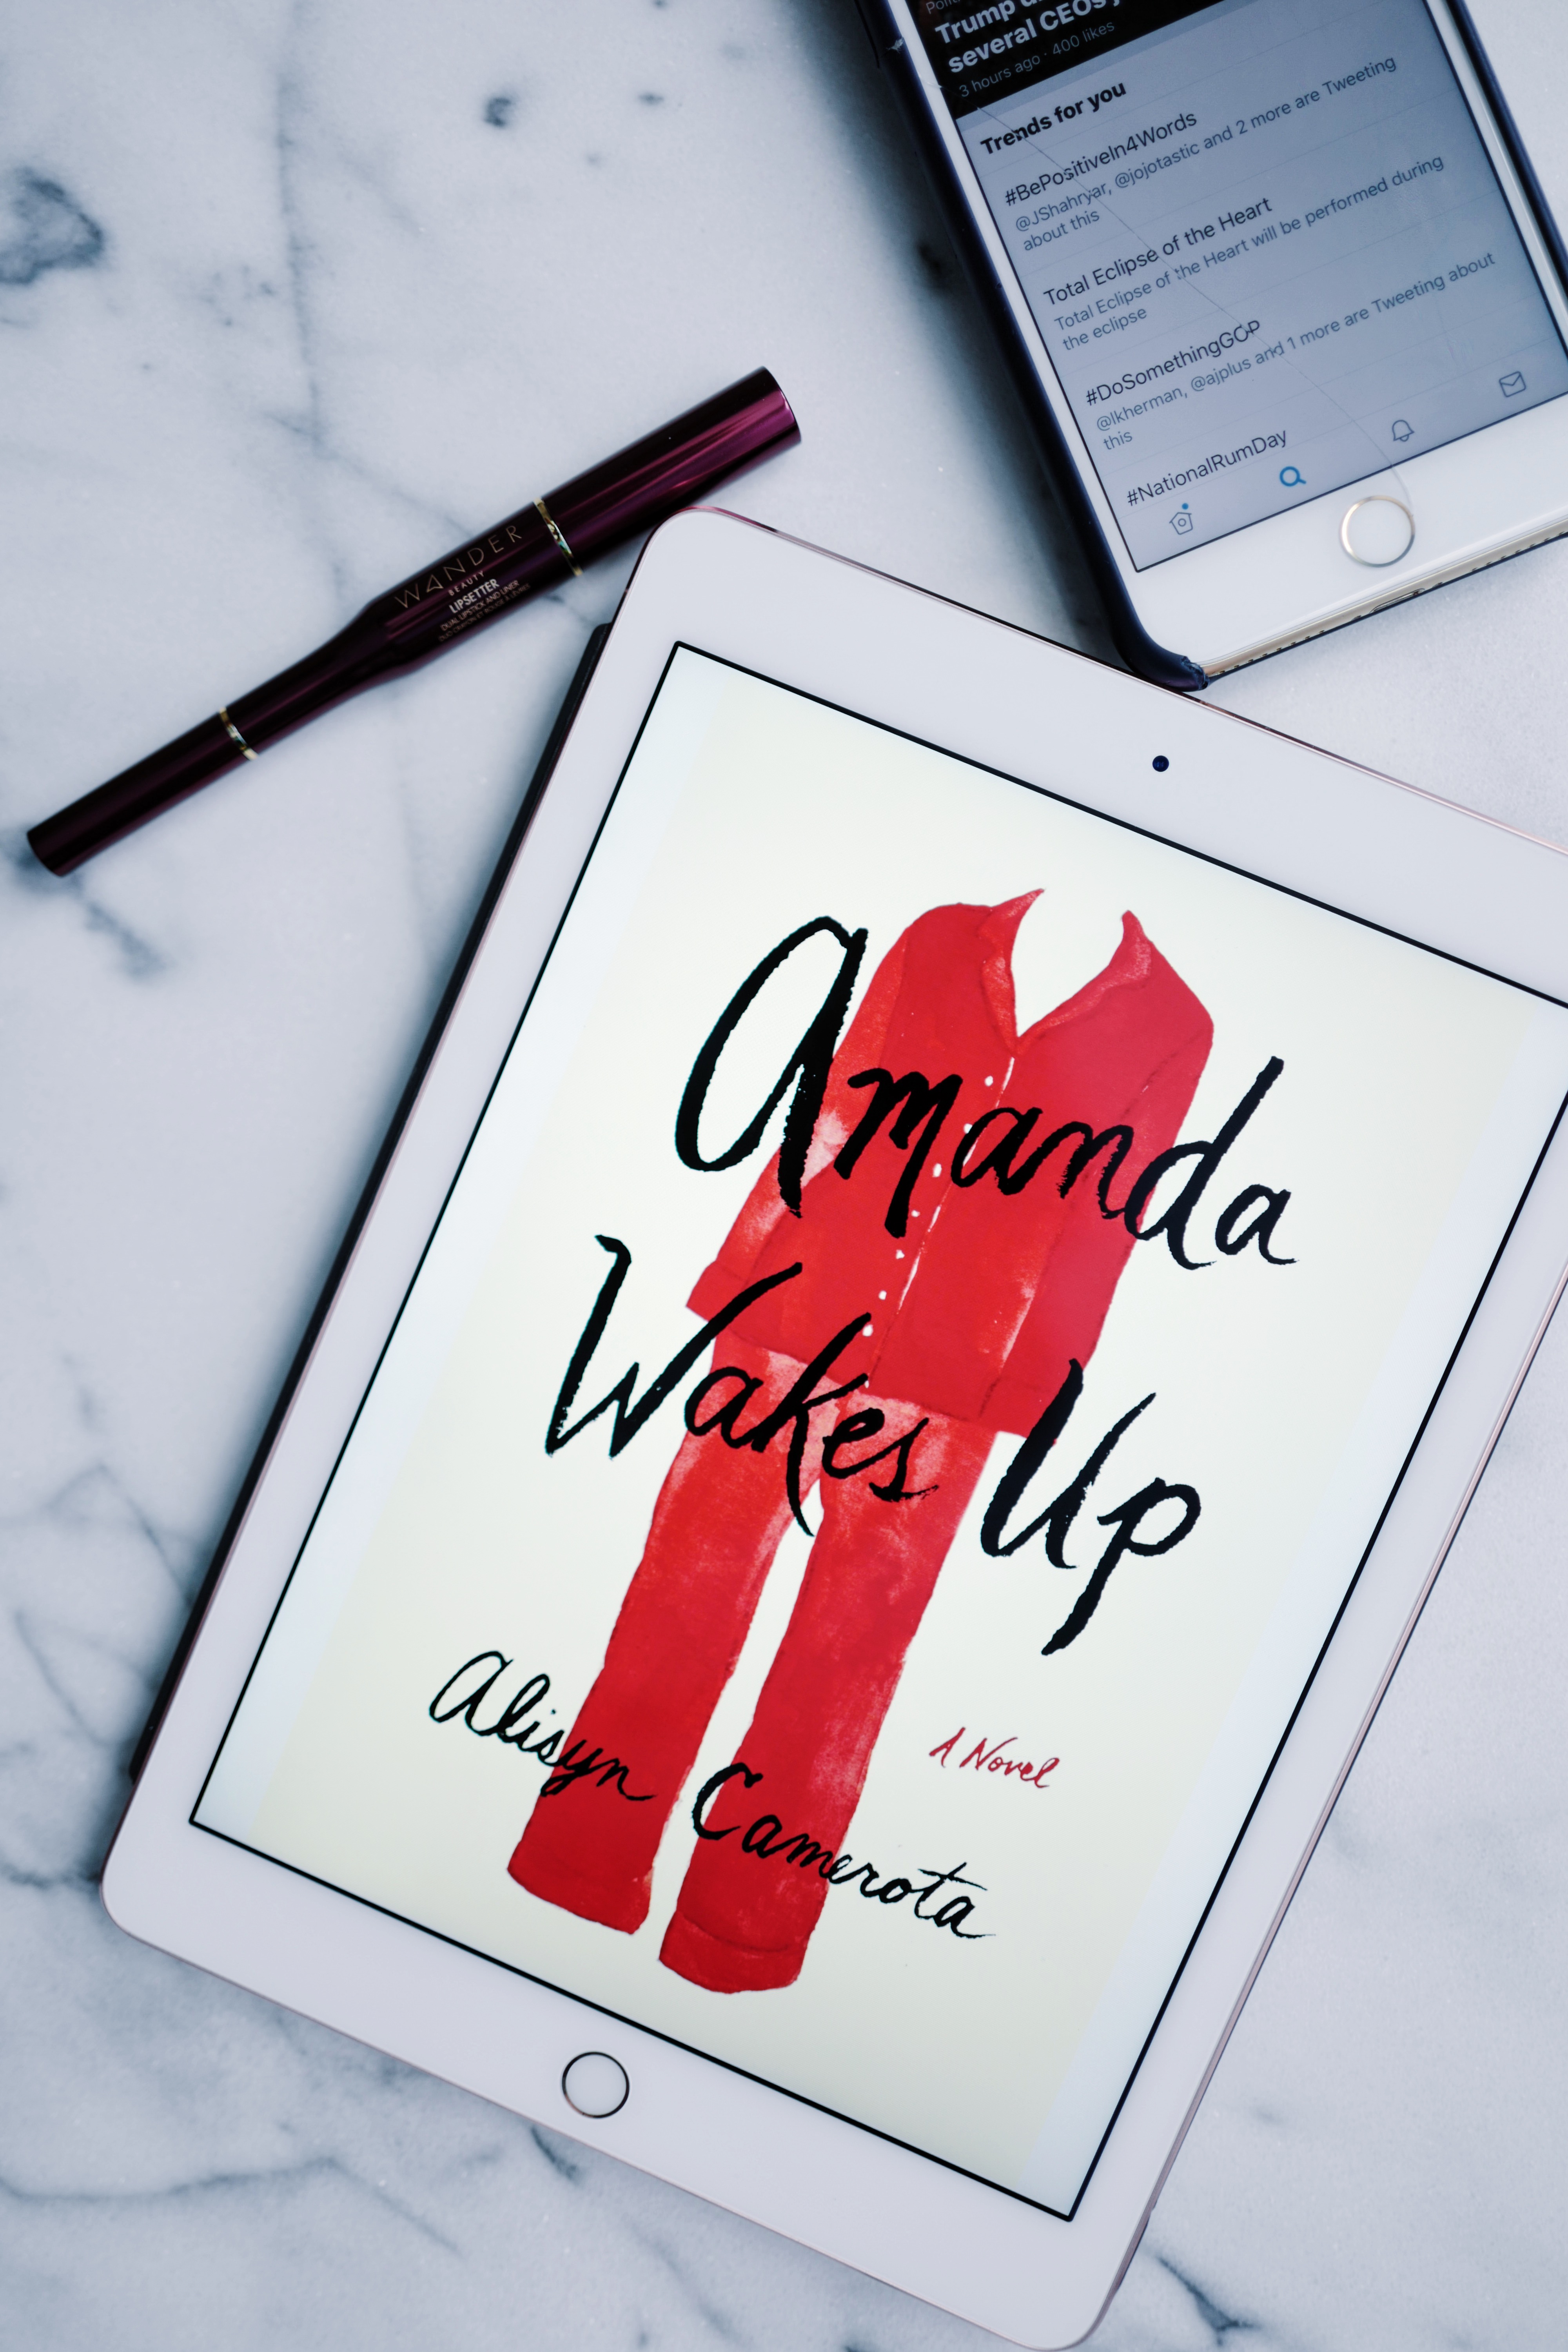 Book Review - Amanda Wakes Up